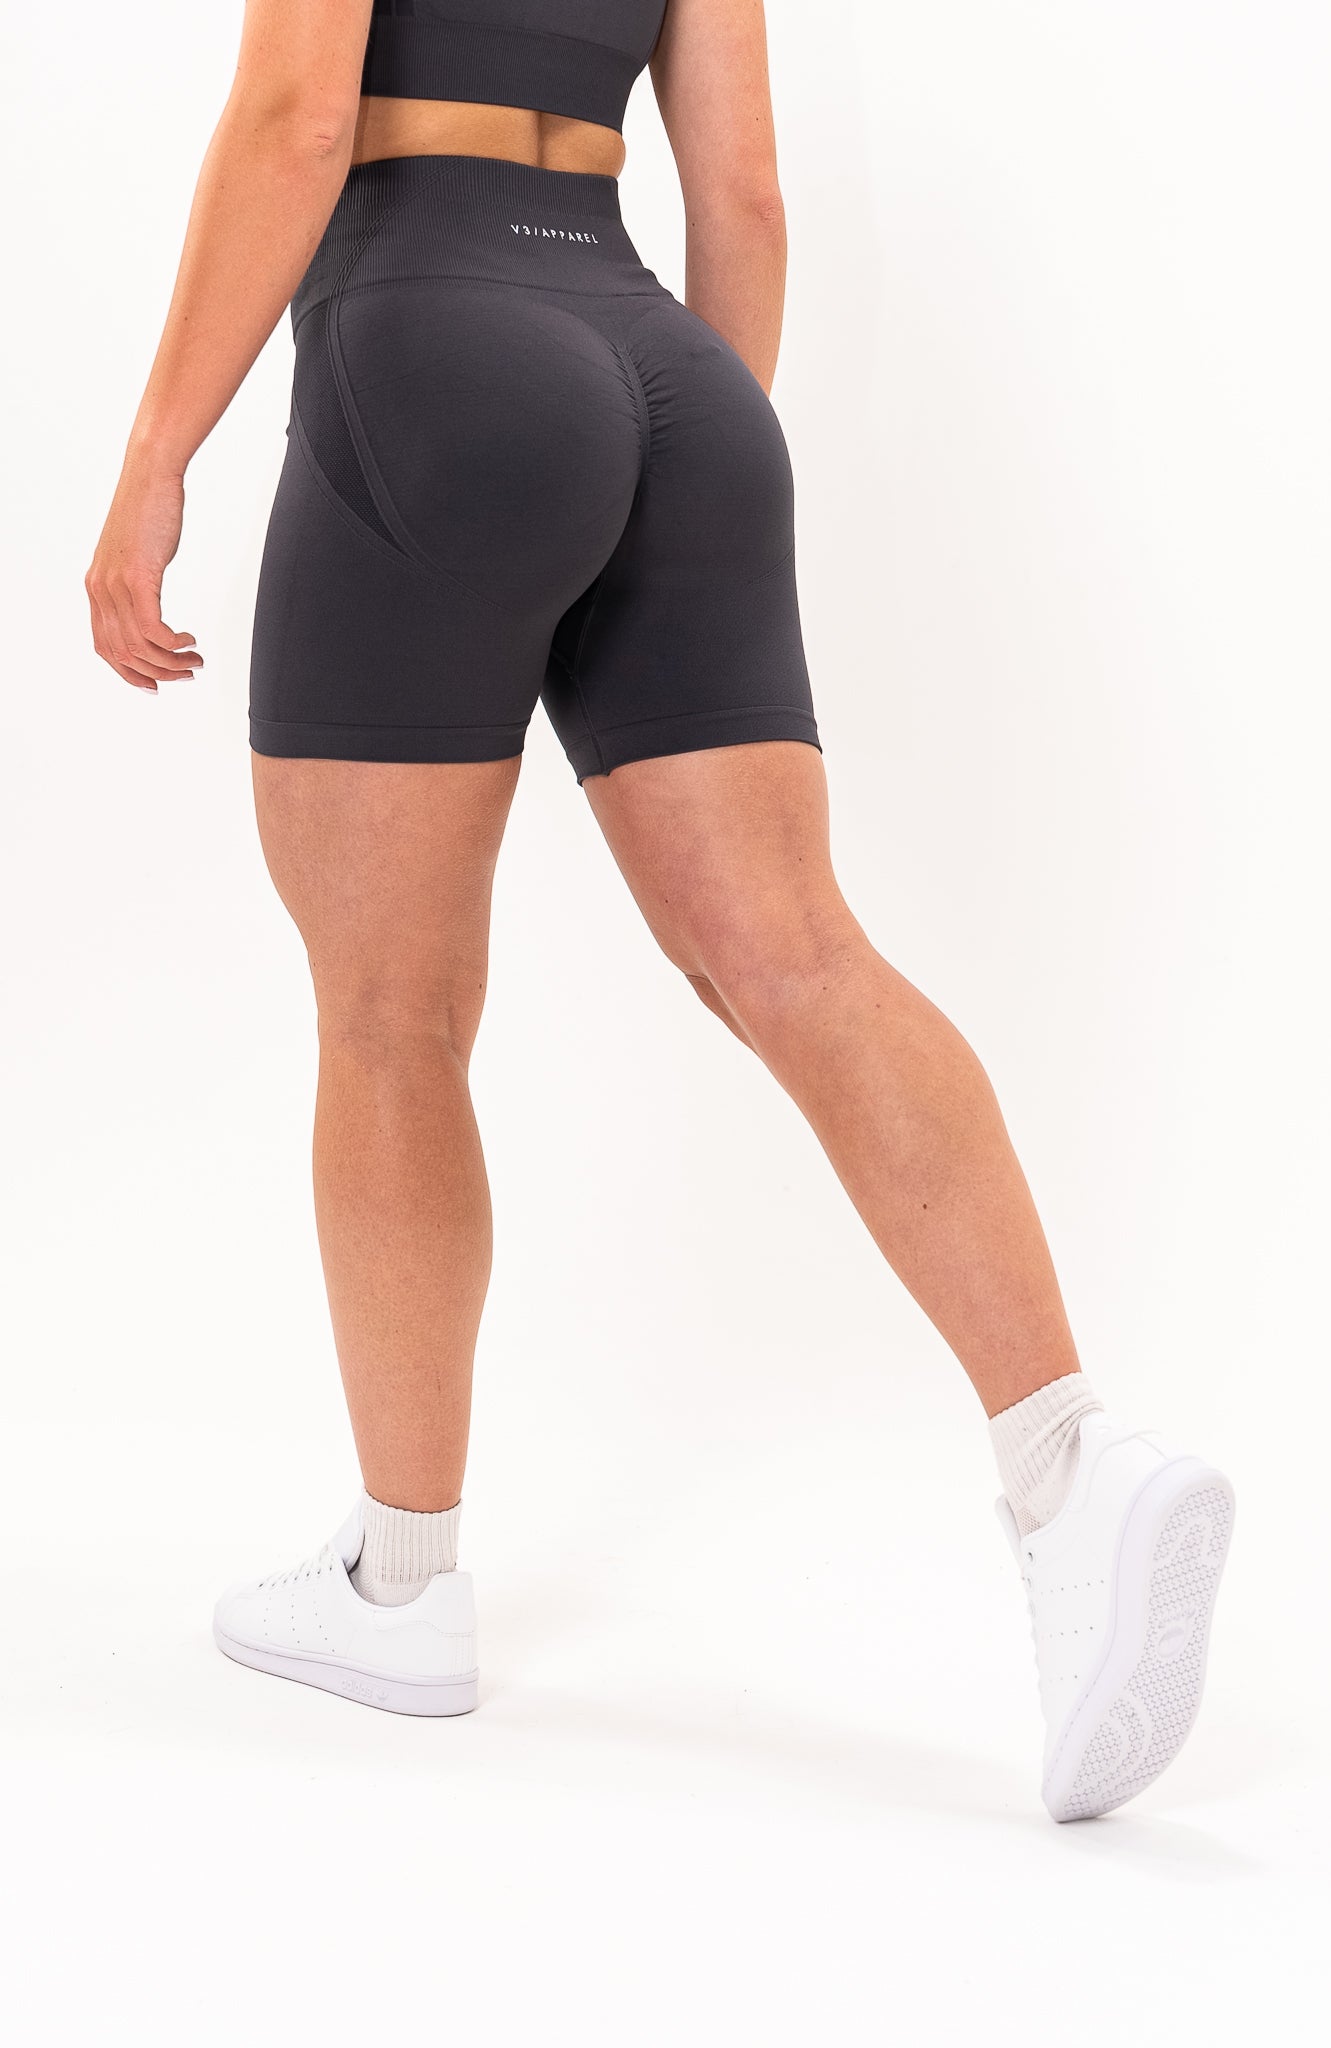 Women's Gym Shorts, Running & Bike Shorts